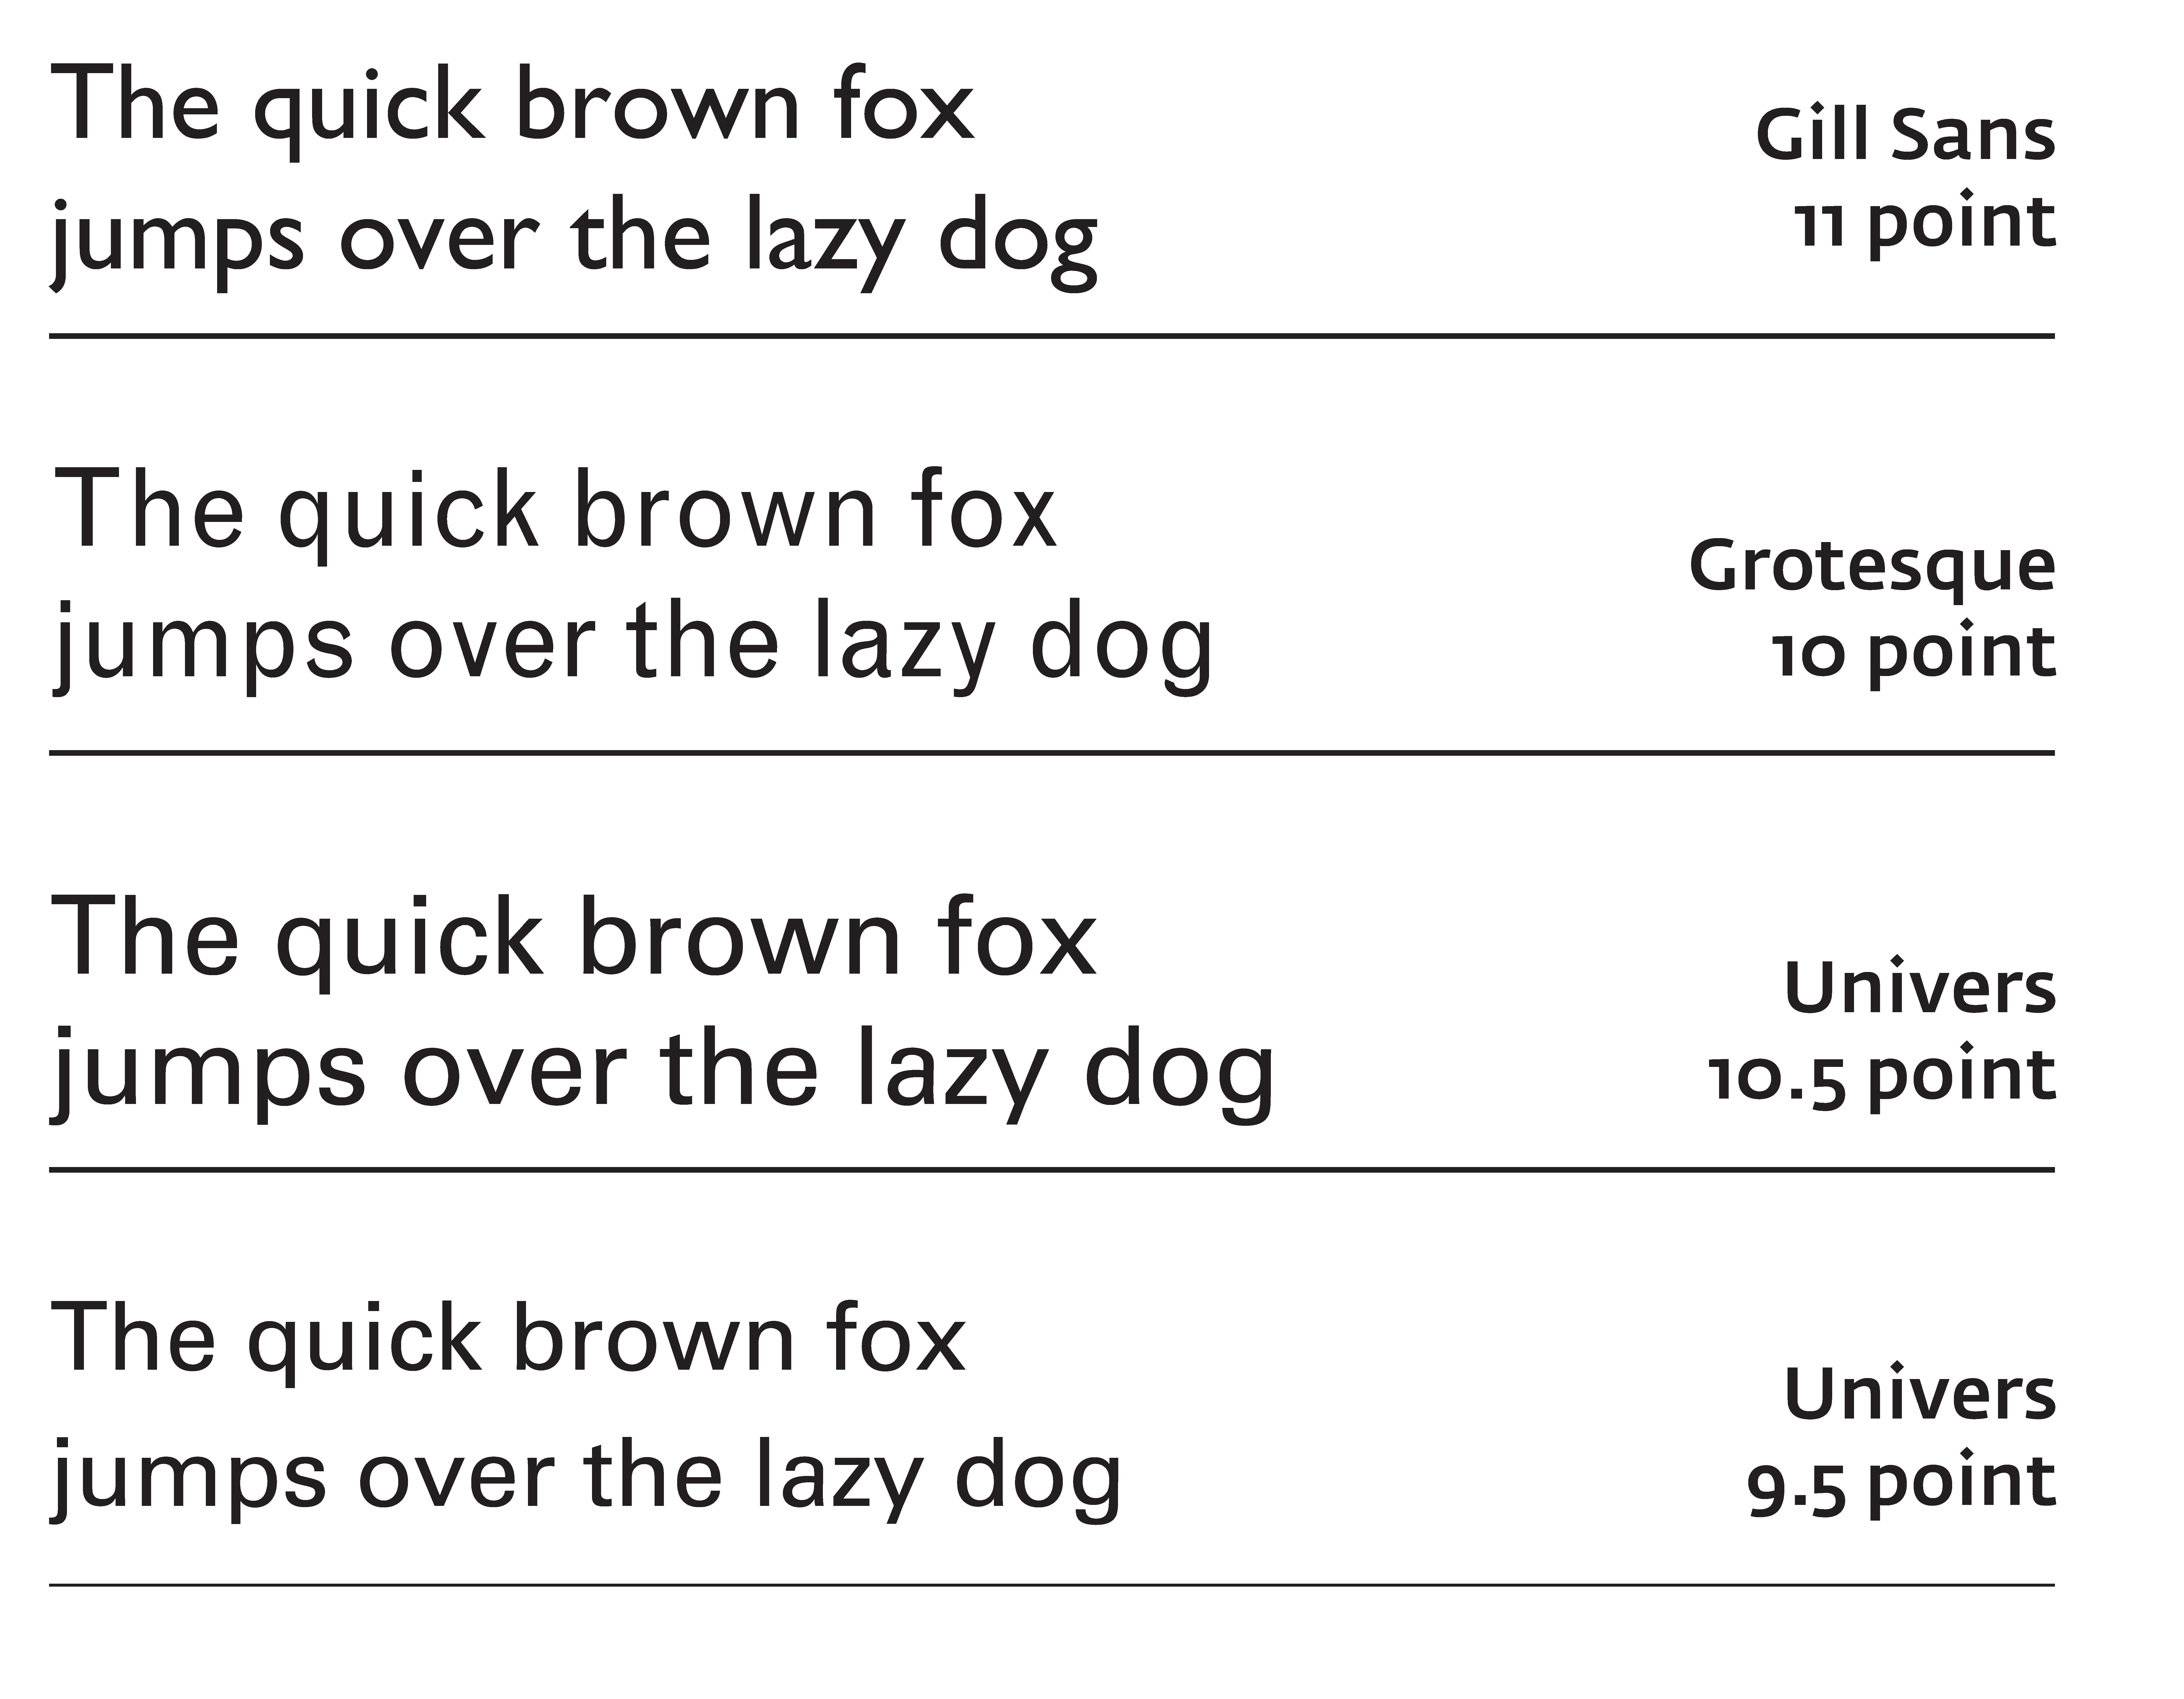 The sans serif typefaces used by Poulton